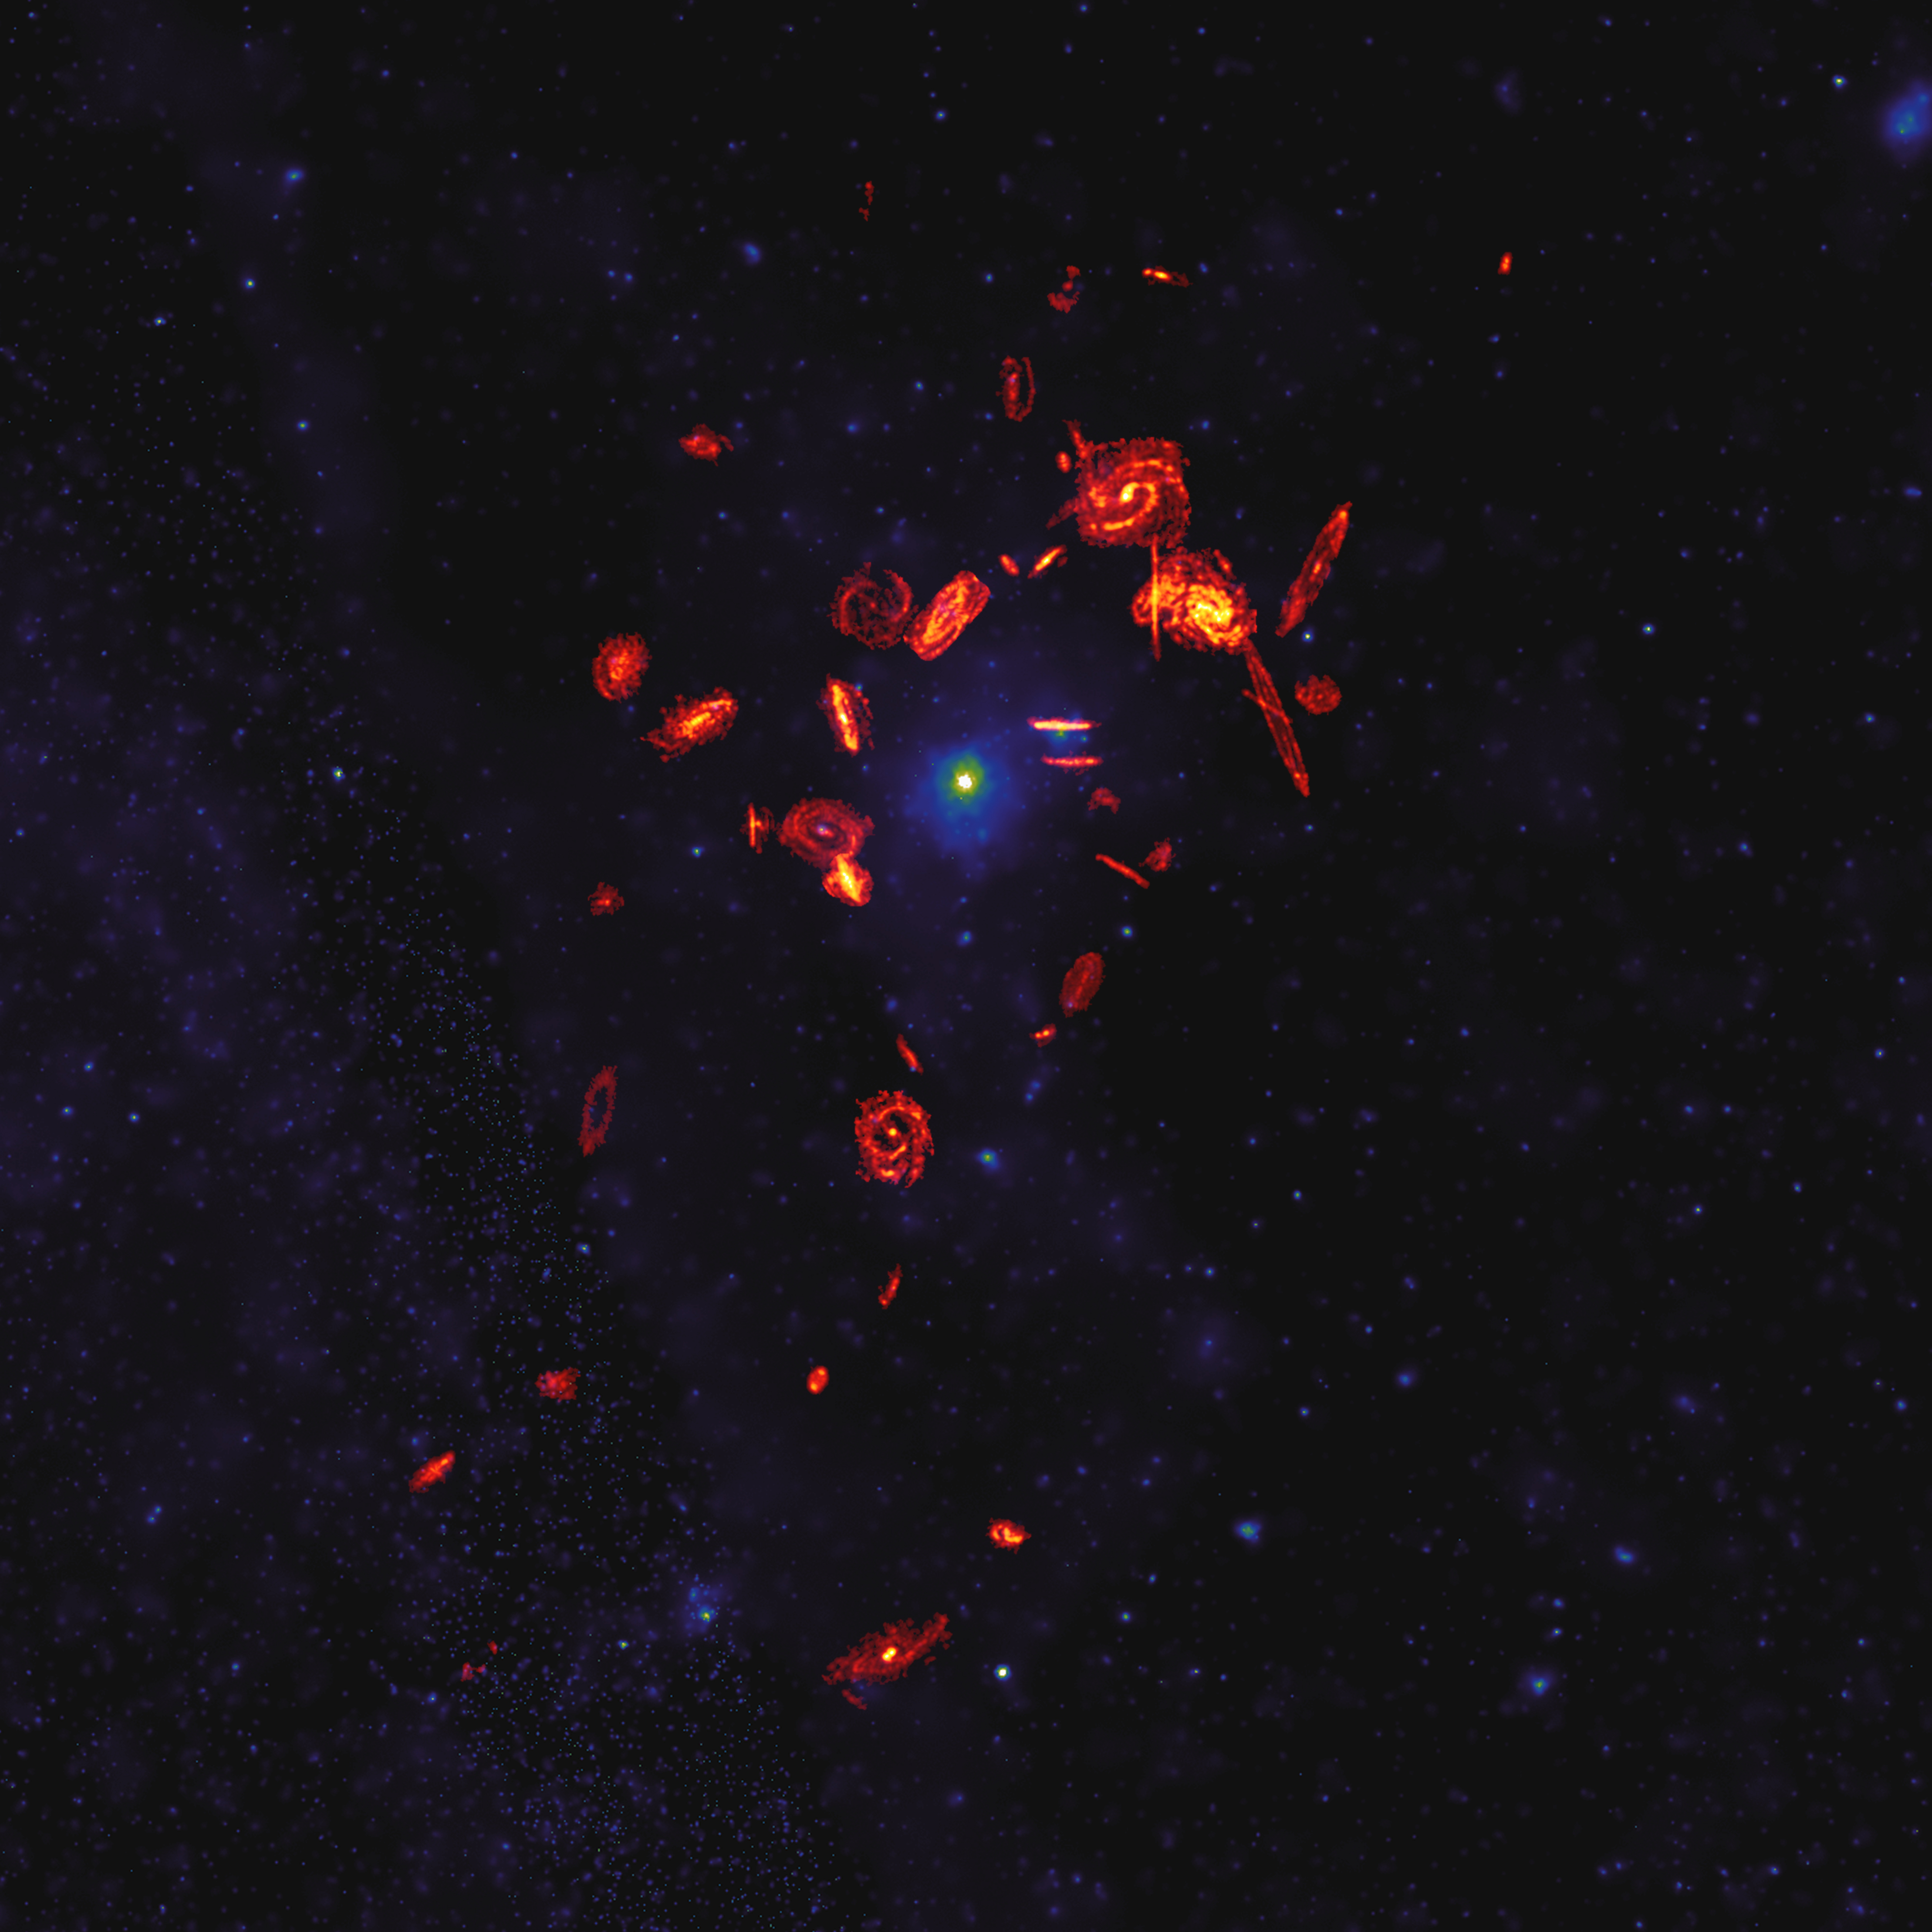 VERTICO’s View of the Virgo Cluster